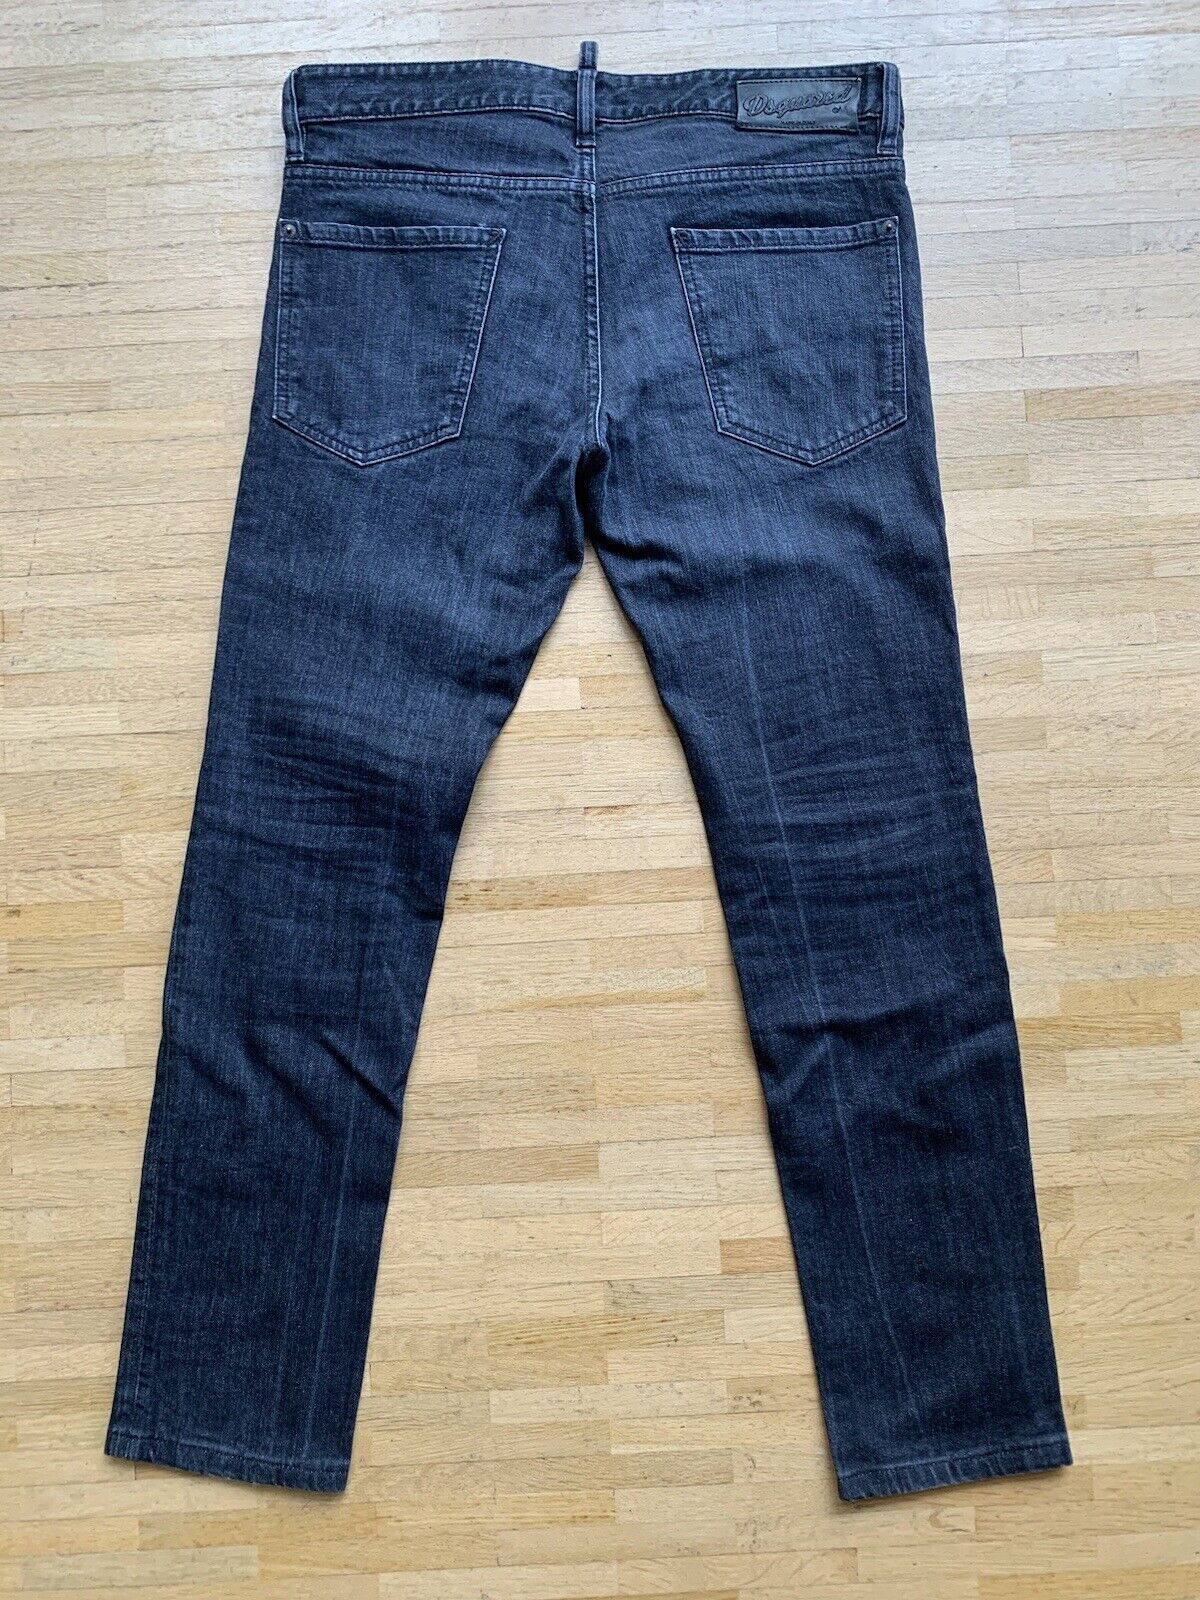 DSQUARED DSQUARED2 Jeans 48 Authentic Slim Jean | eBay